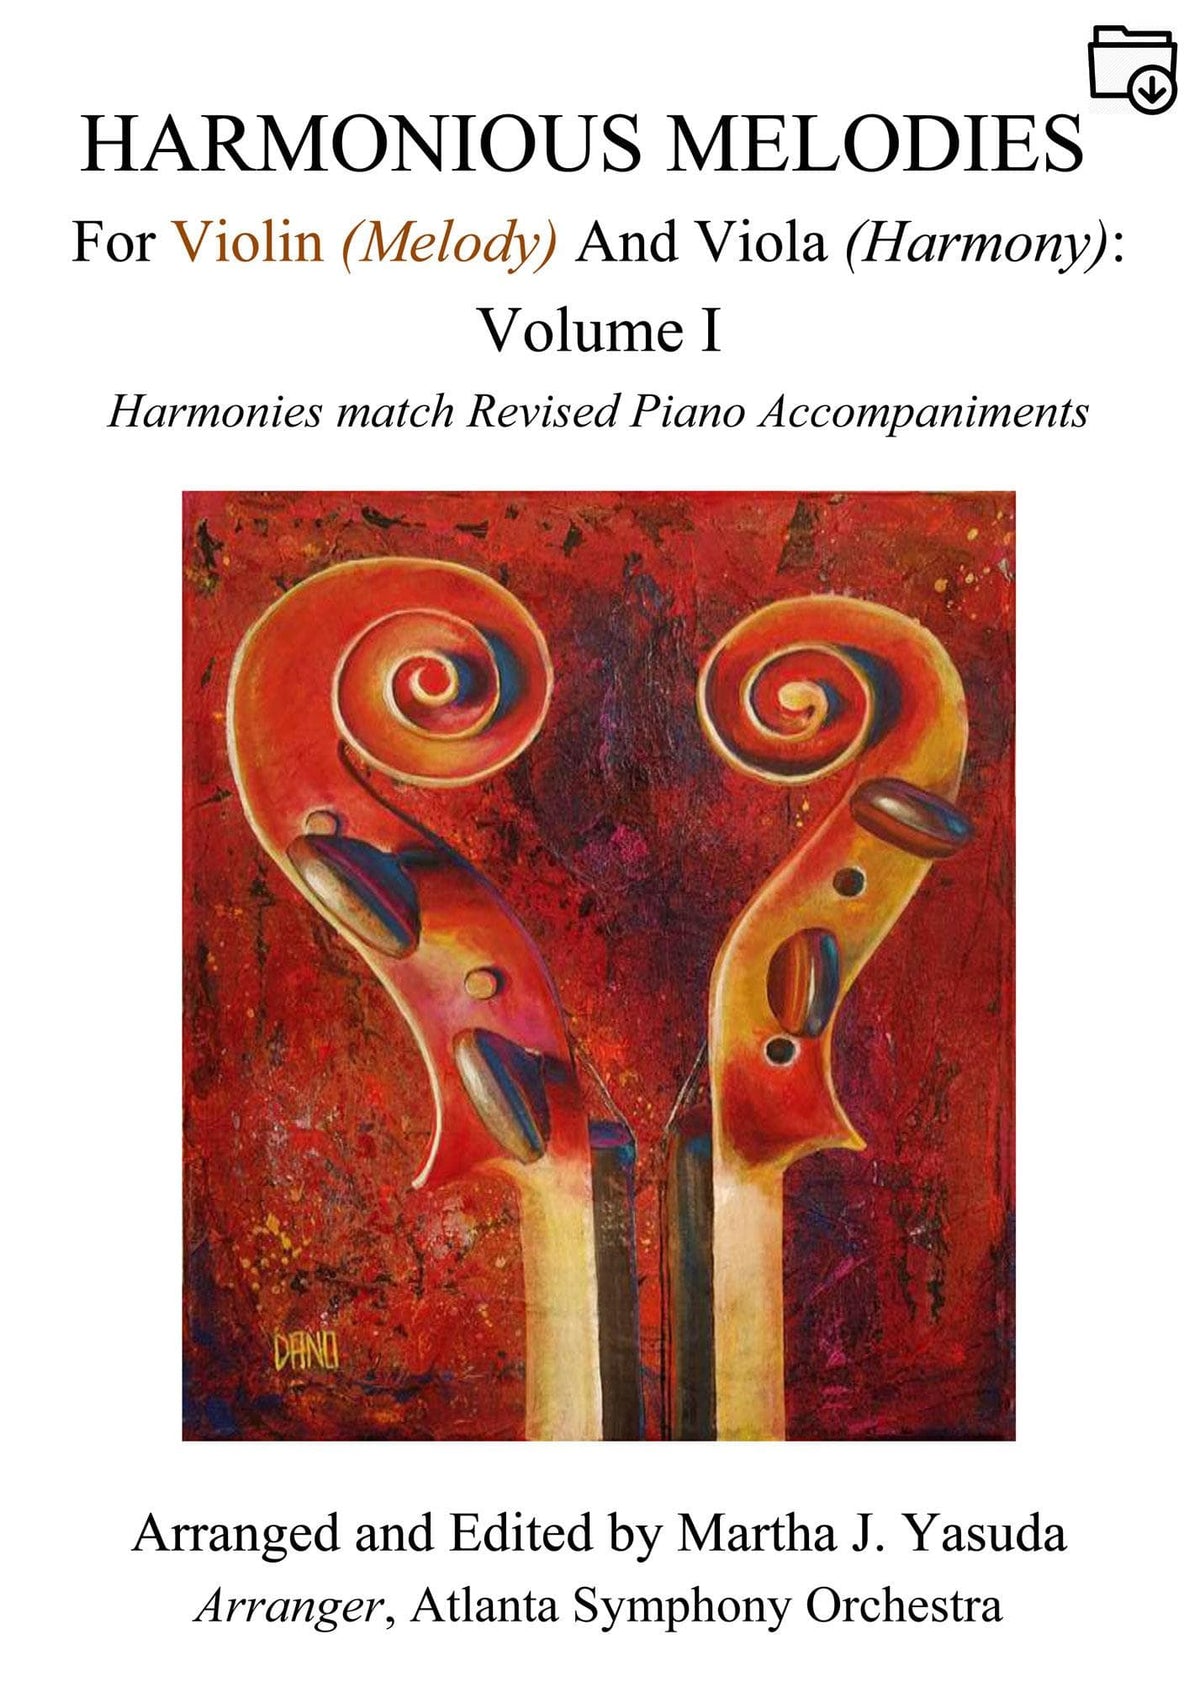 Yasuda, Martha - Harmonious Melodies For Violin and Viola, Volume I - Digital Download